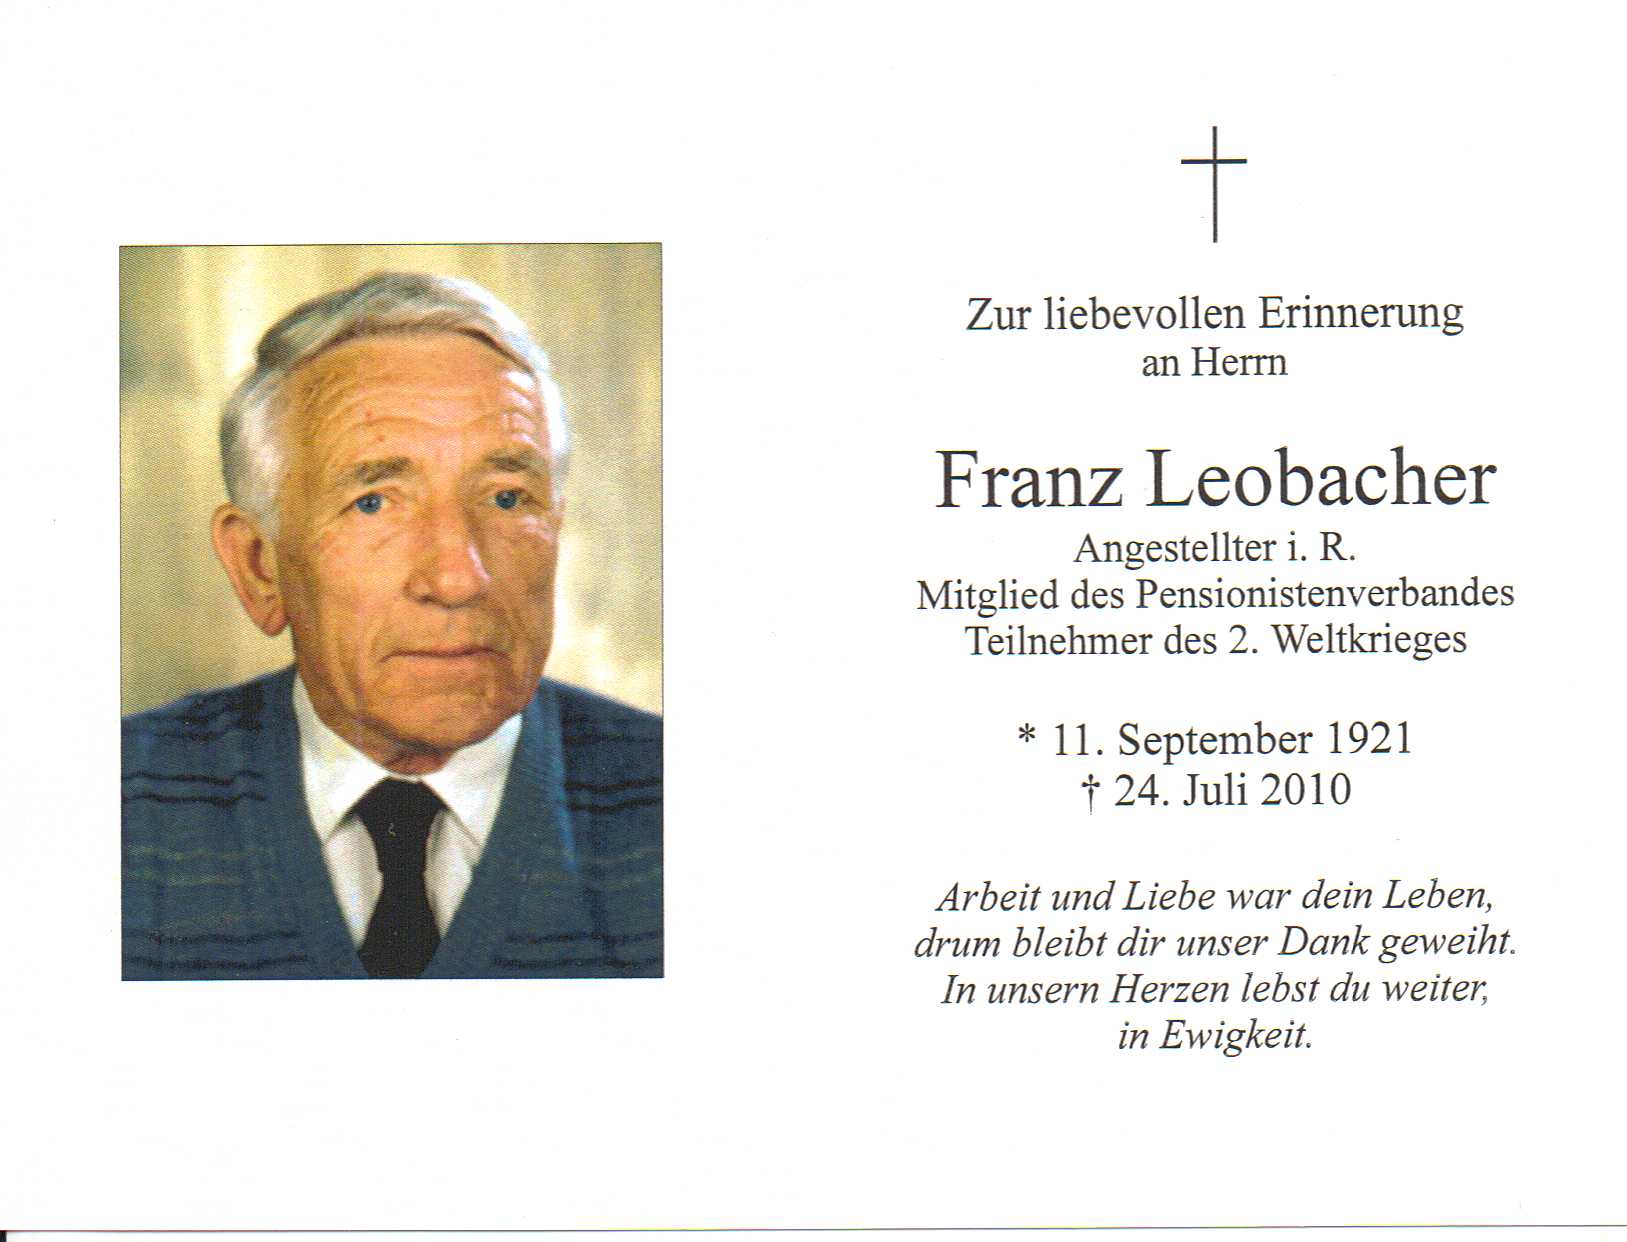 Franz Leobacher